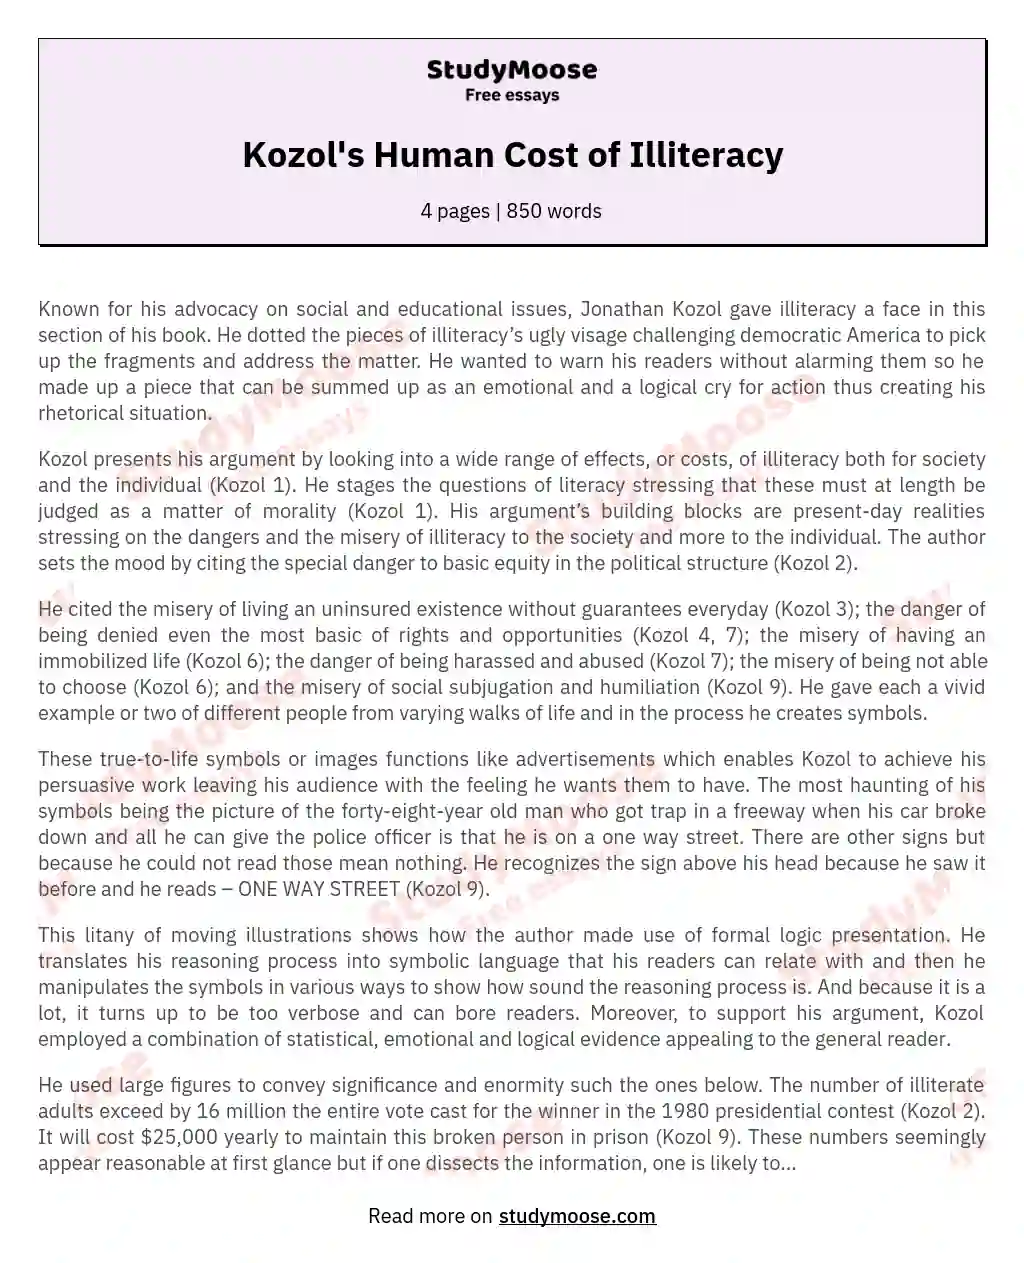 Kozol's Human Cost of Illiteracy essay